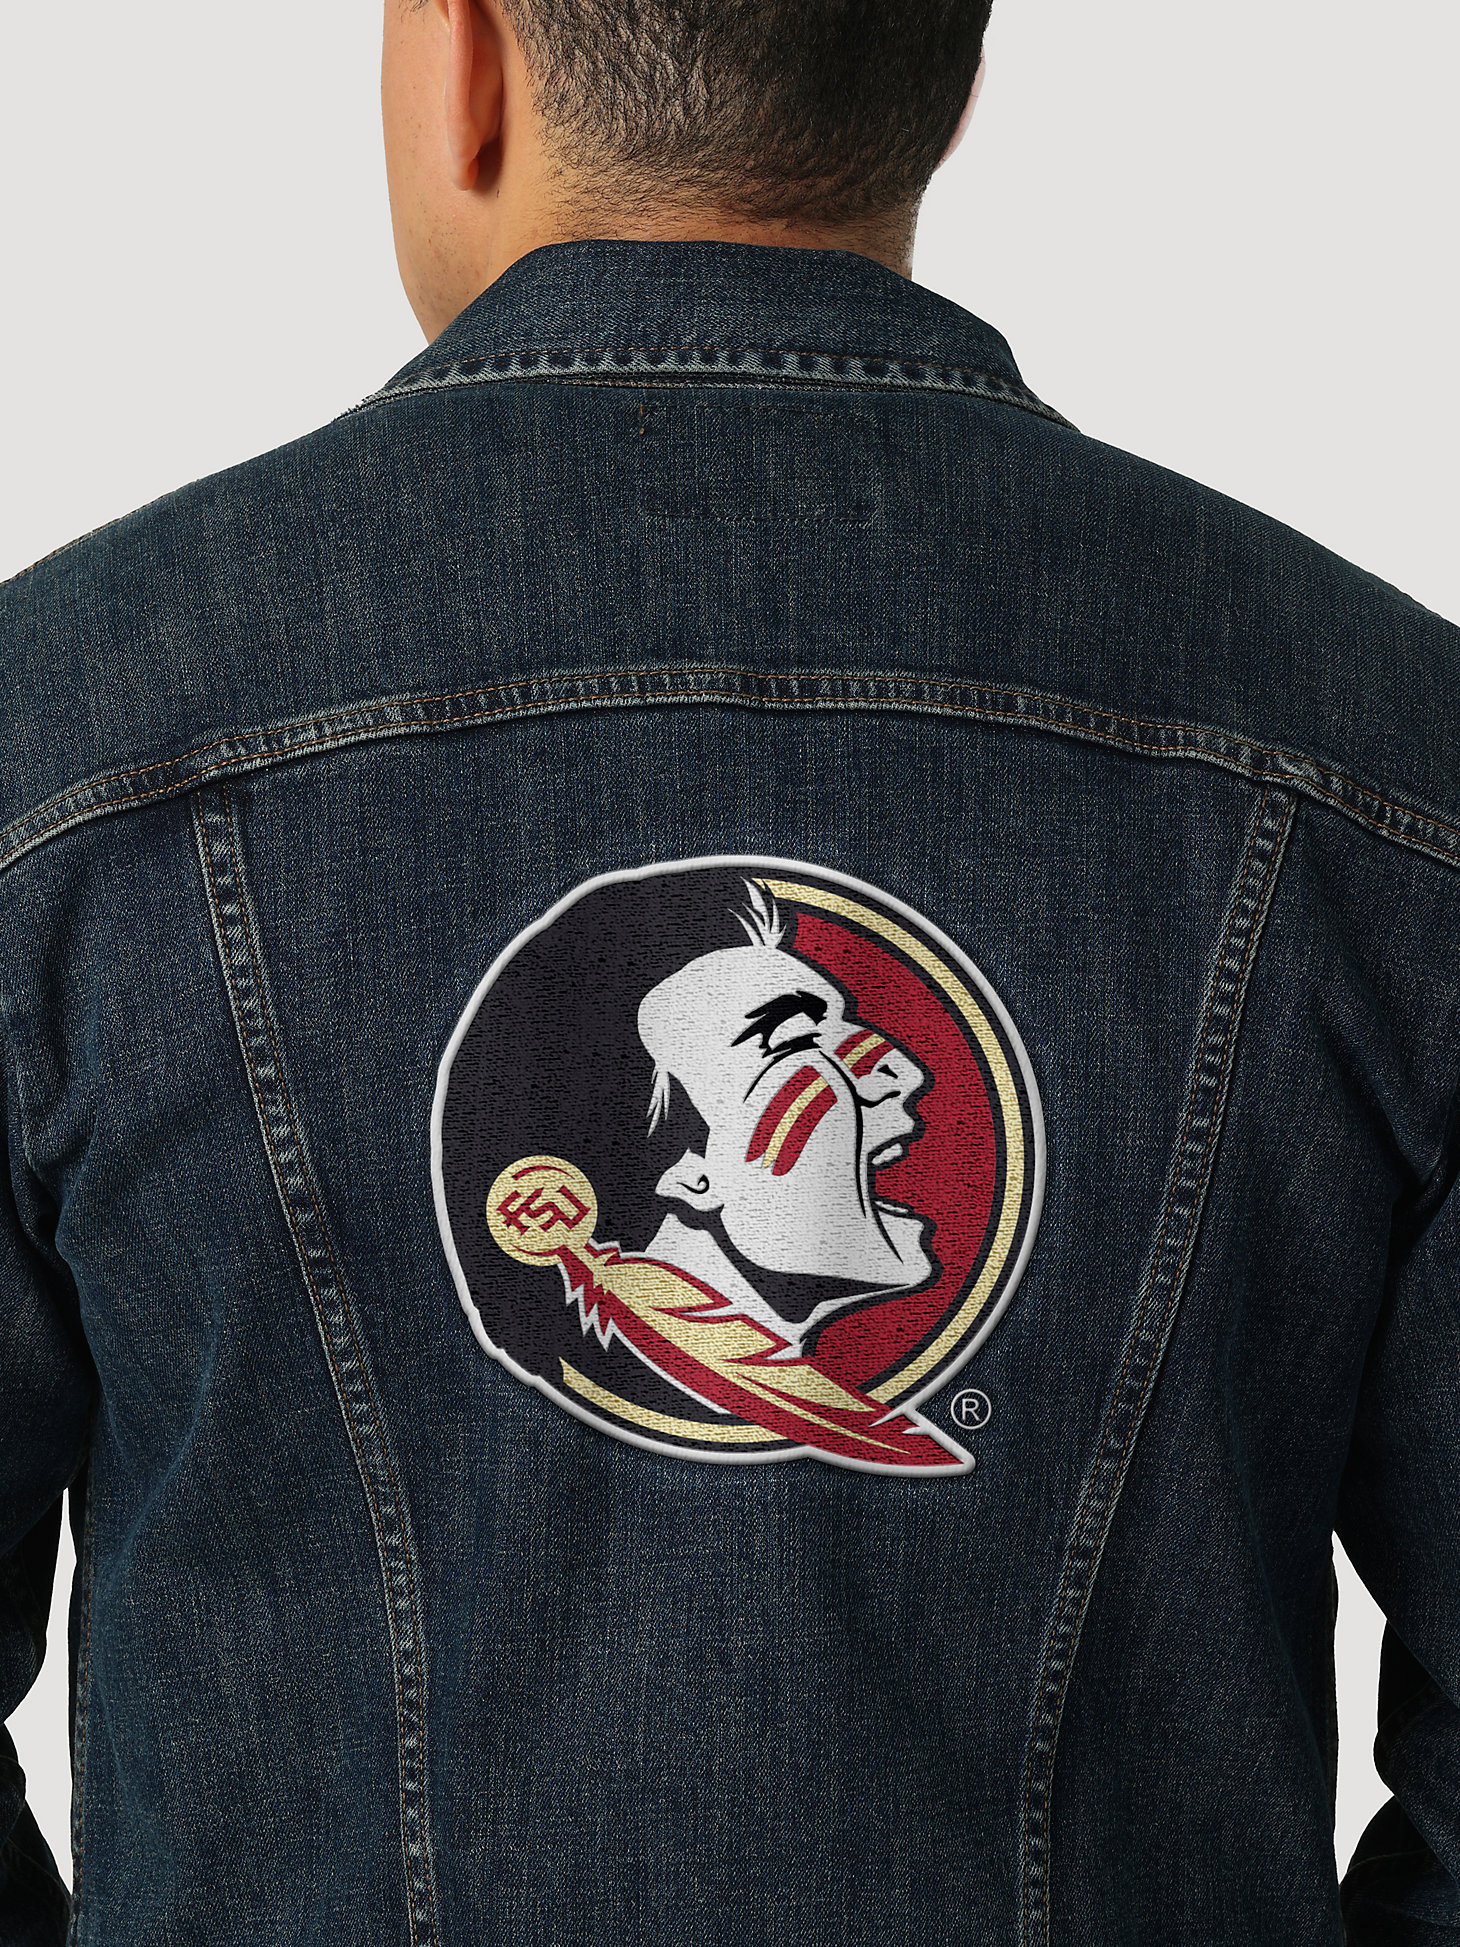 Men's Wrangler Retro Collegiate Embroidered Denim Jacket in Florida State alternative view 3